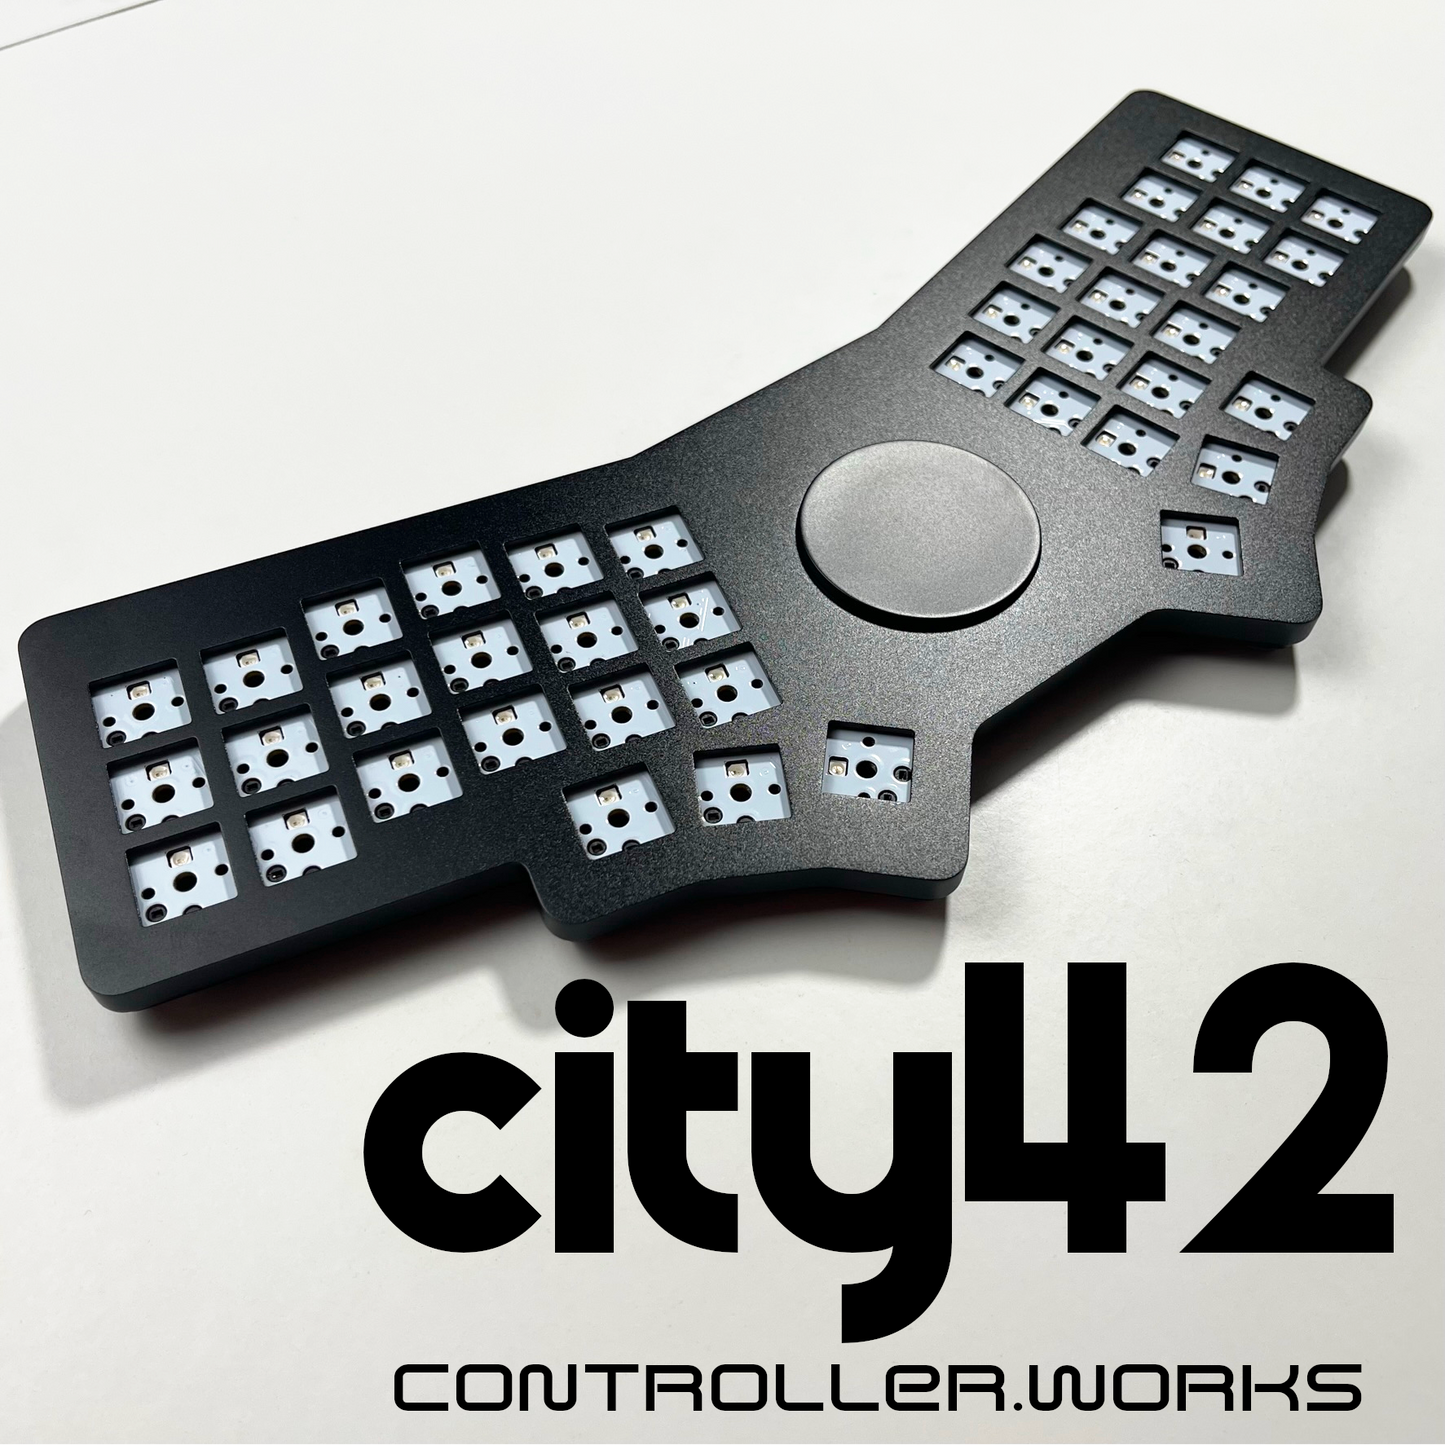 city42 Ergonomic Keyboard